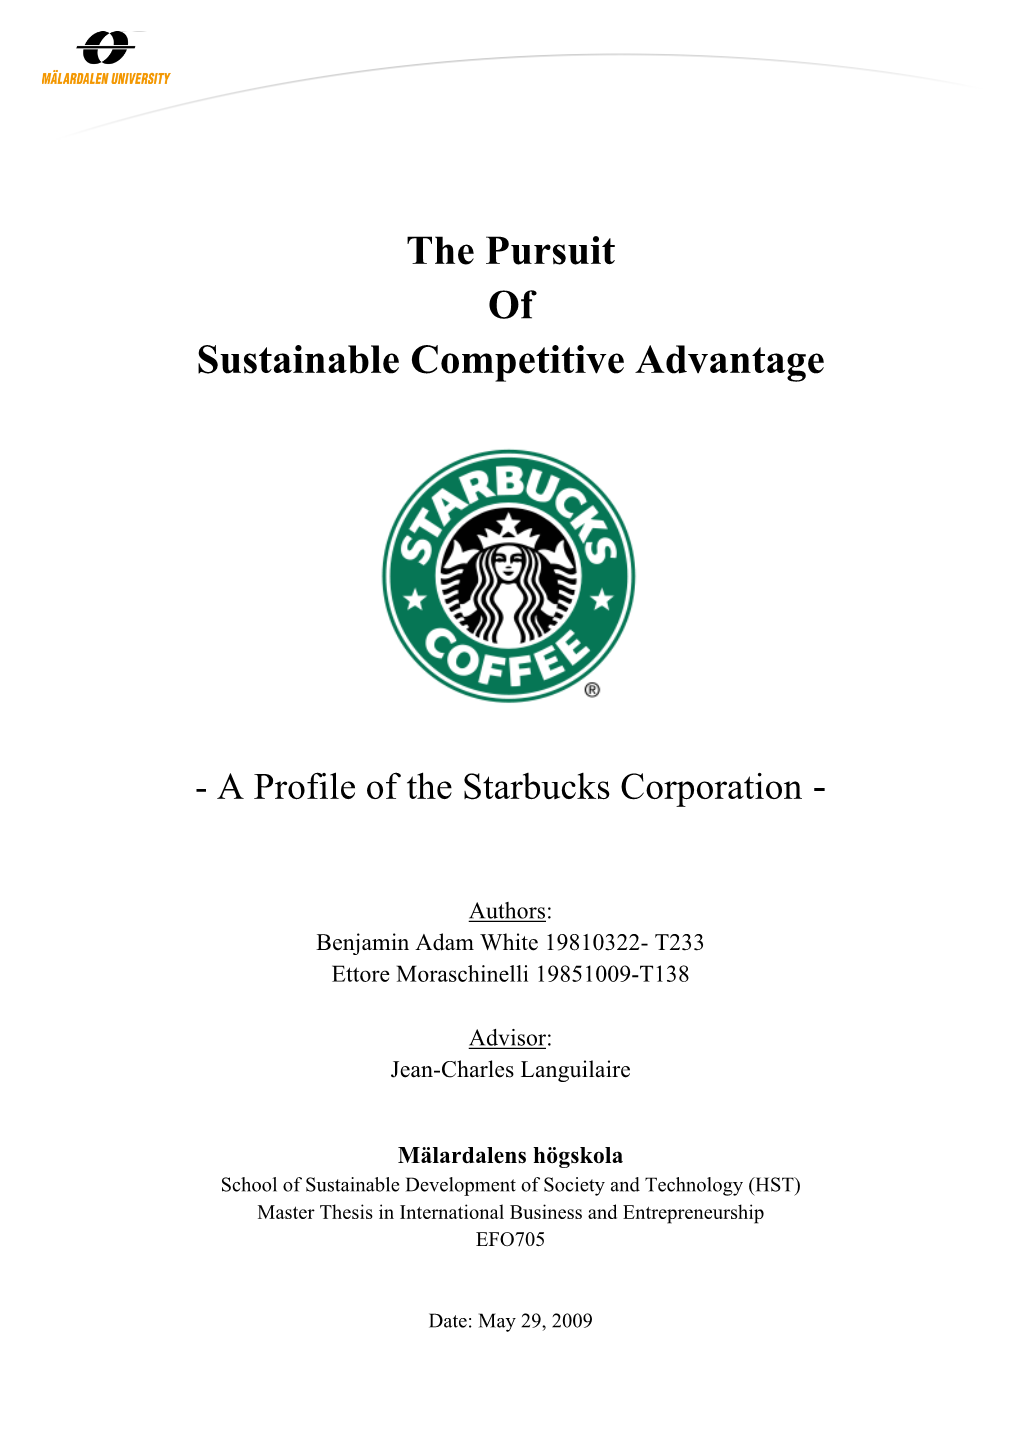 The Pursuit of Sustainable Competitive Advantage